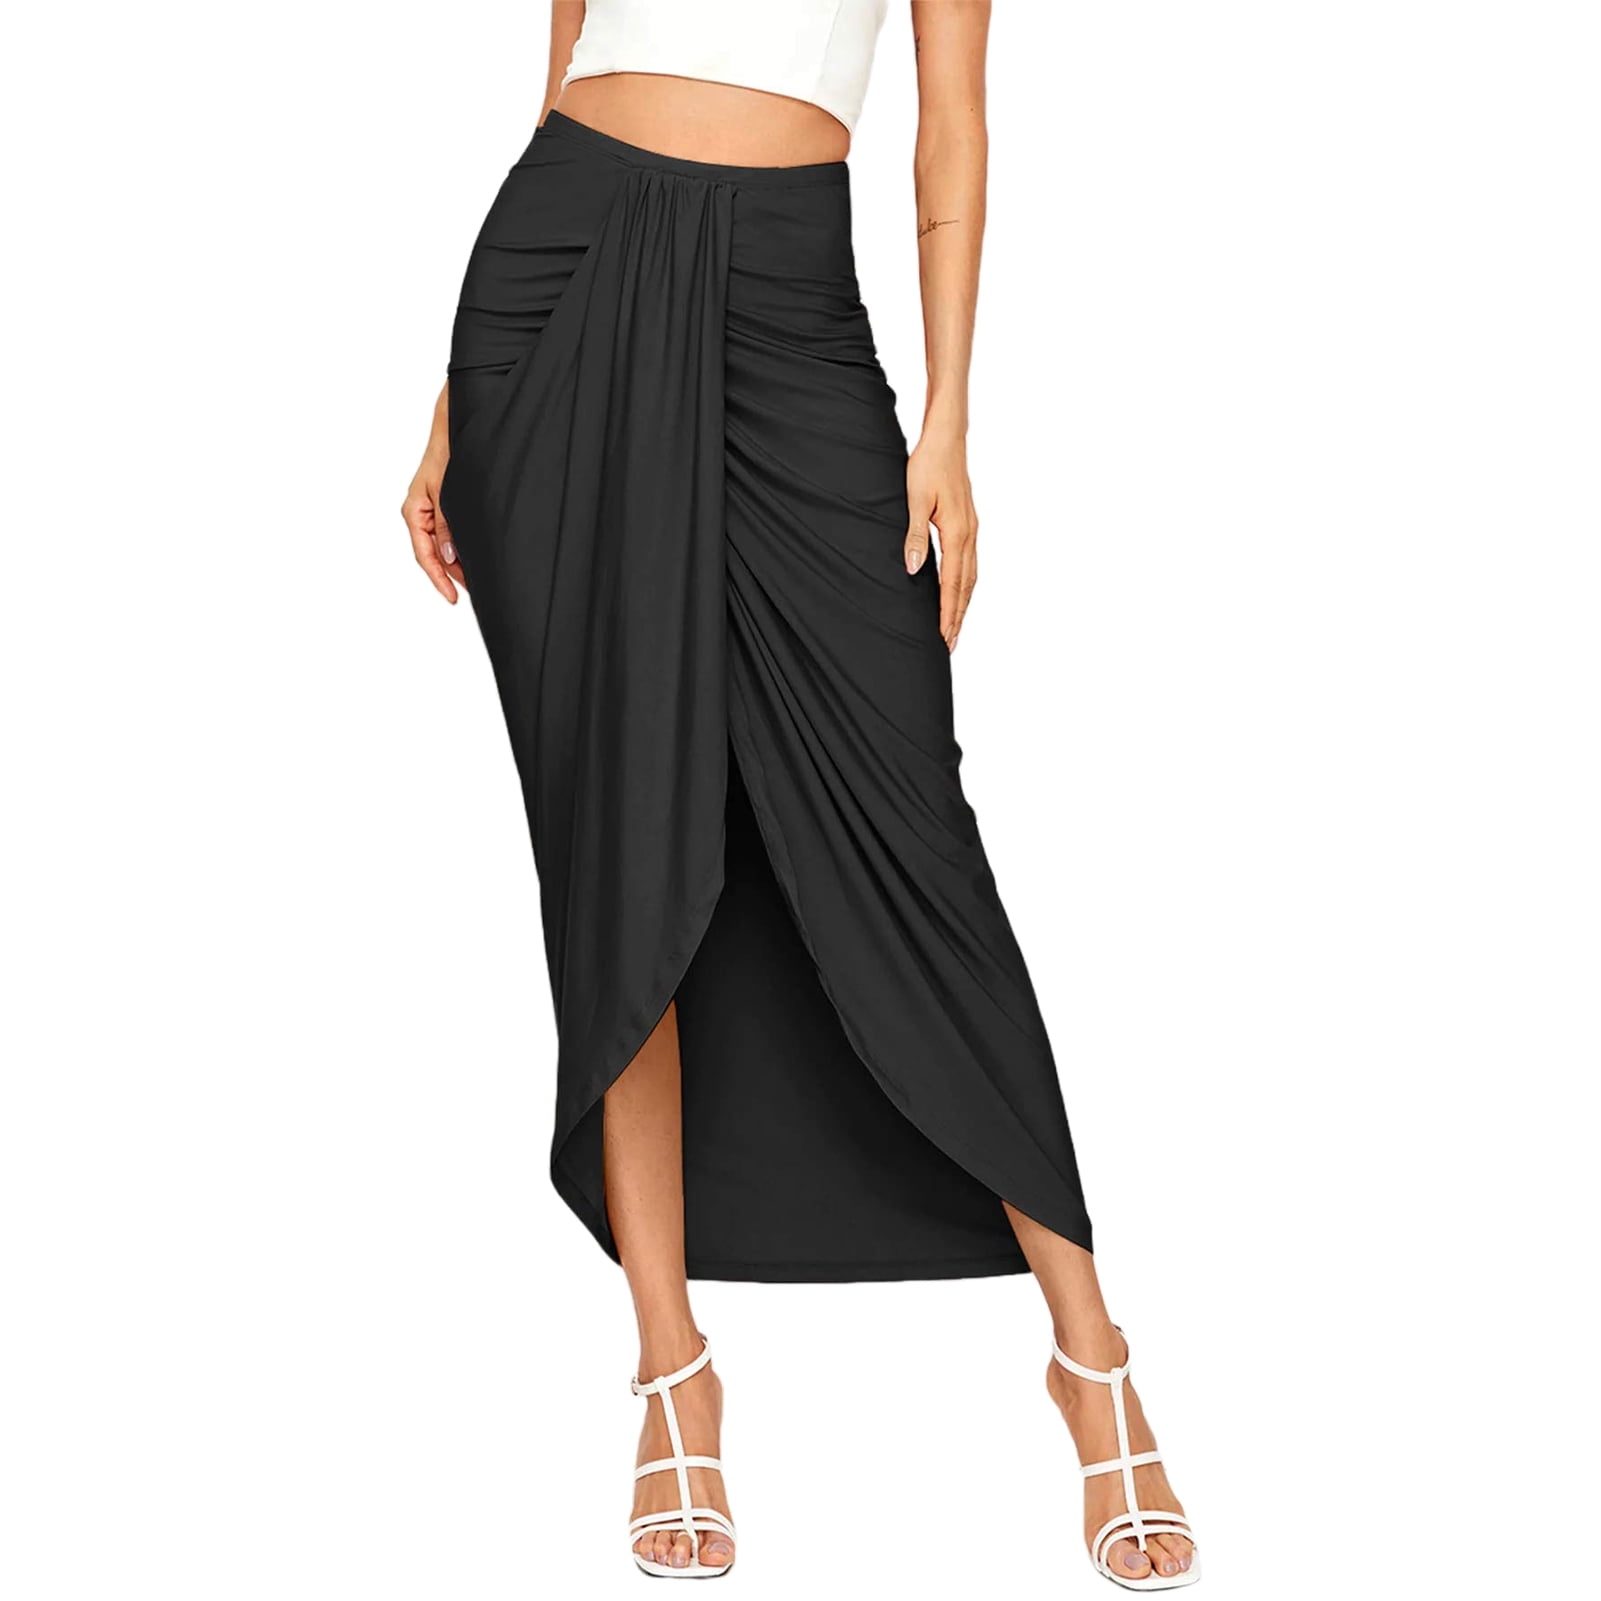 TBW Maxi Draped Skirt Women Elastic Casual Dress Asymmetrical